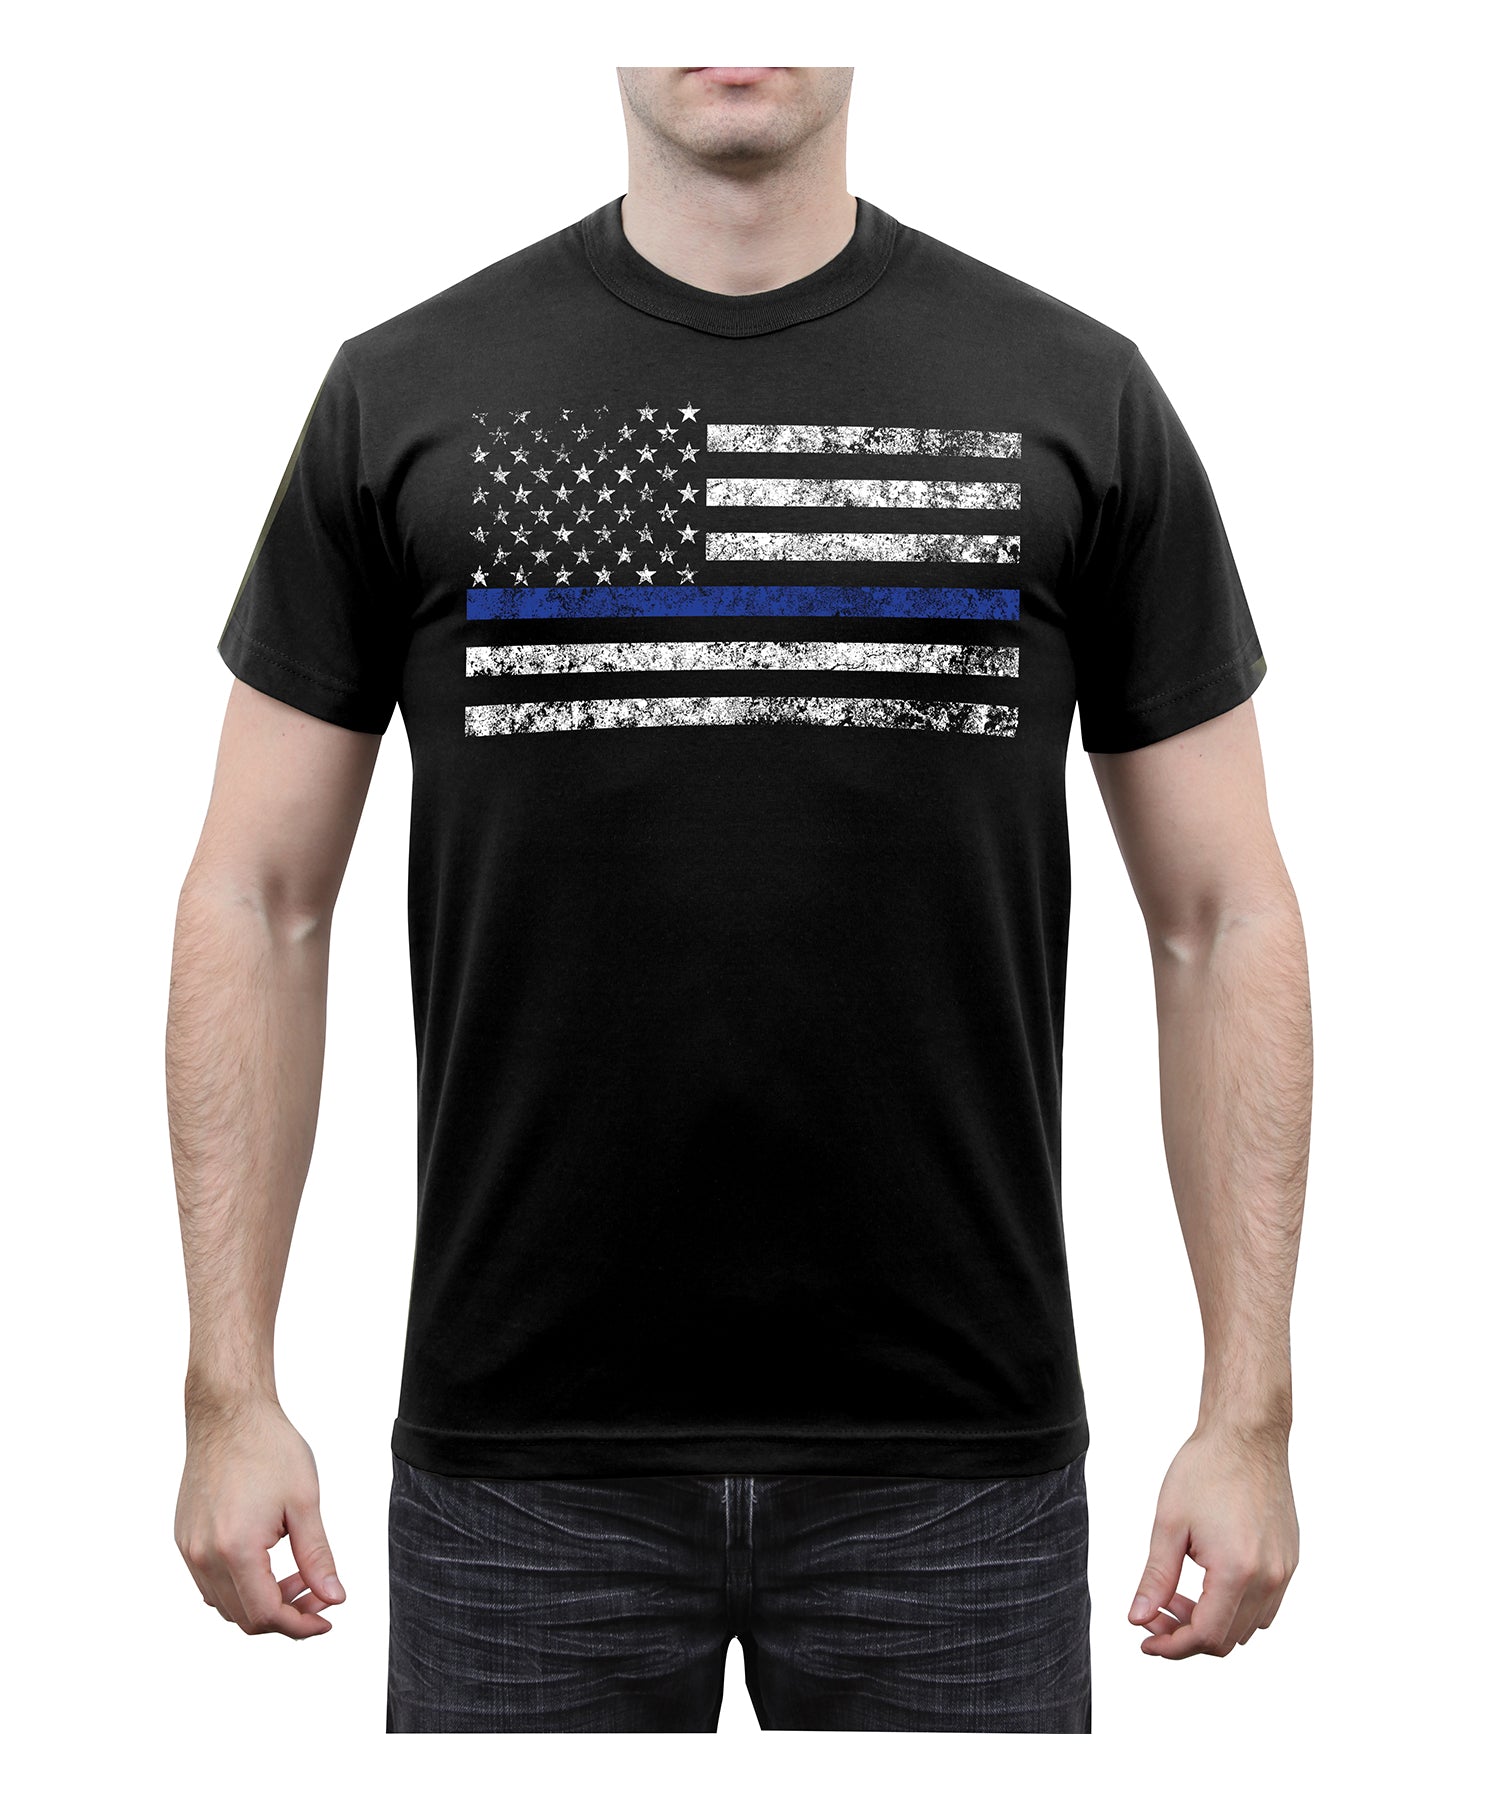 [Public Safety] Poly/Cotton Thin Blue Line T-Shirts Police Blue Line - Black